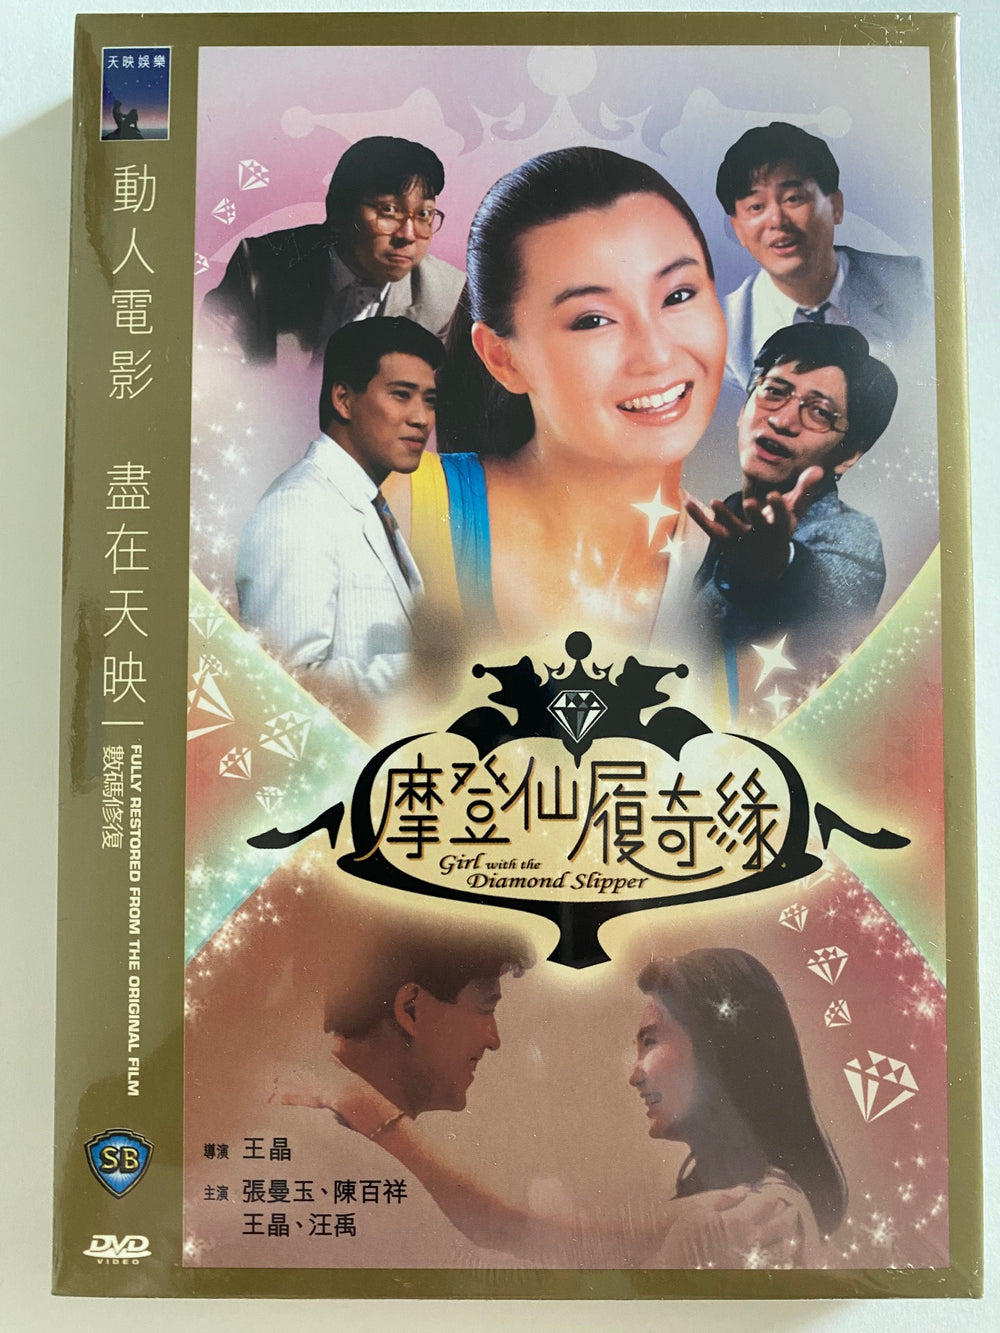 Girl With The Diamond Slipper 摩登仙履奇緣 1985 (SHAW BROS) DVD ENGLISH SUBTITLES (REGION 3)